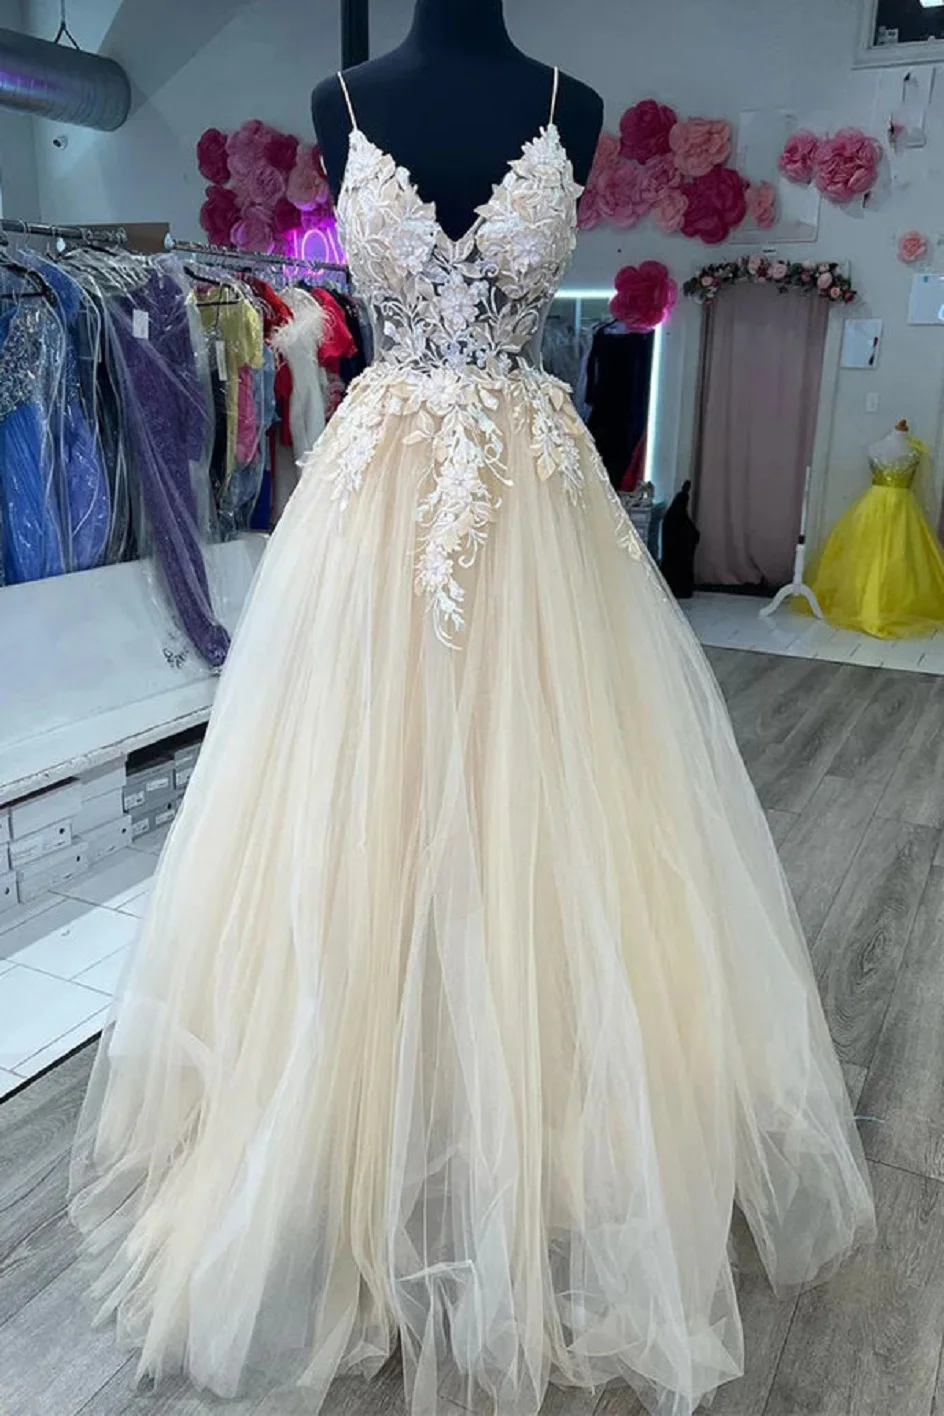 

Princess A-line Tulle V-neck Floor-Length Prom Dress With Appliques Lace Wedding Dresses vestidos de fiesta elegantesBridal Gown